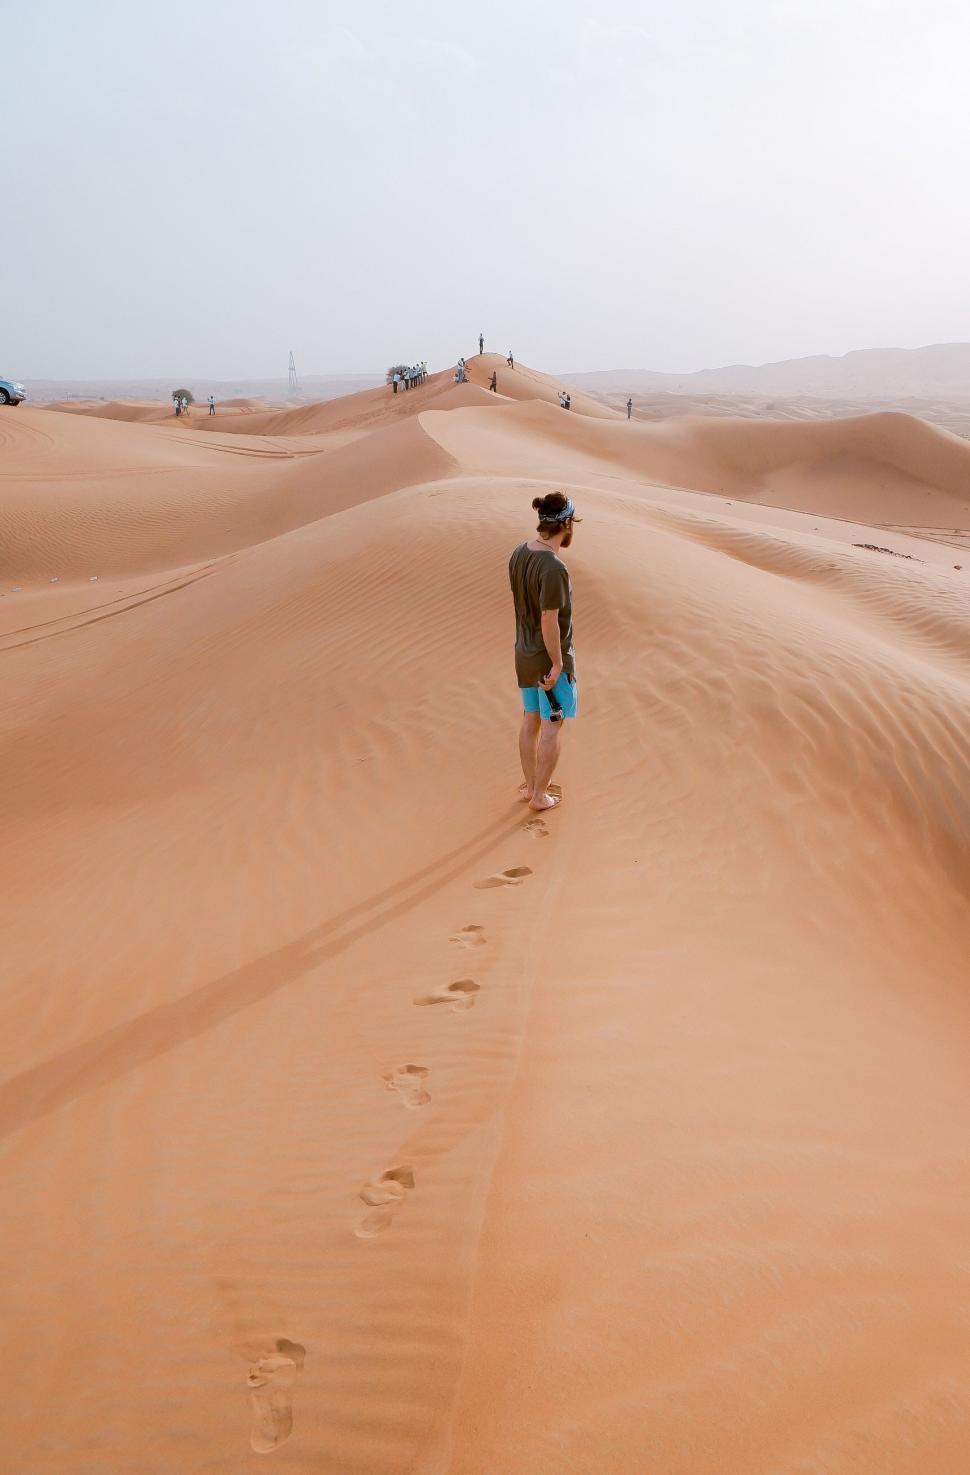 Free Image of Man Standing in Desert 